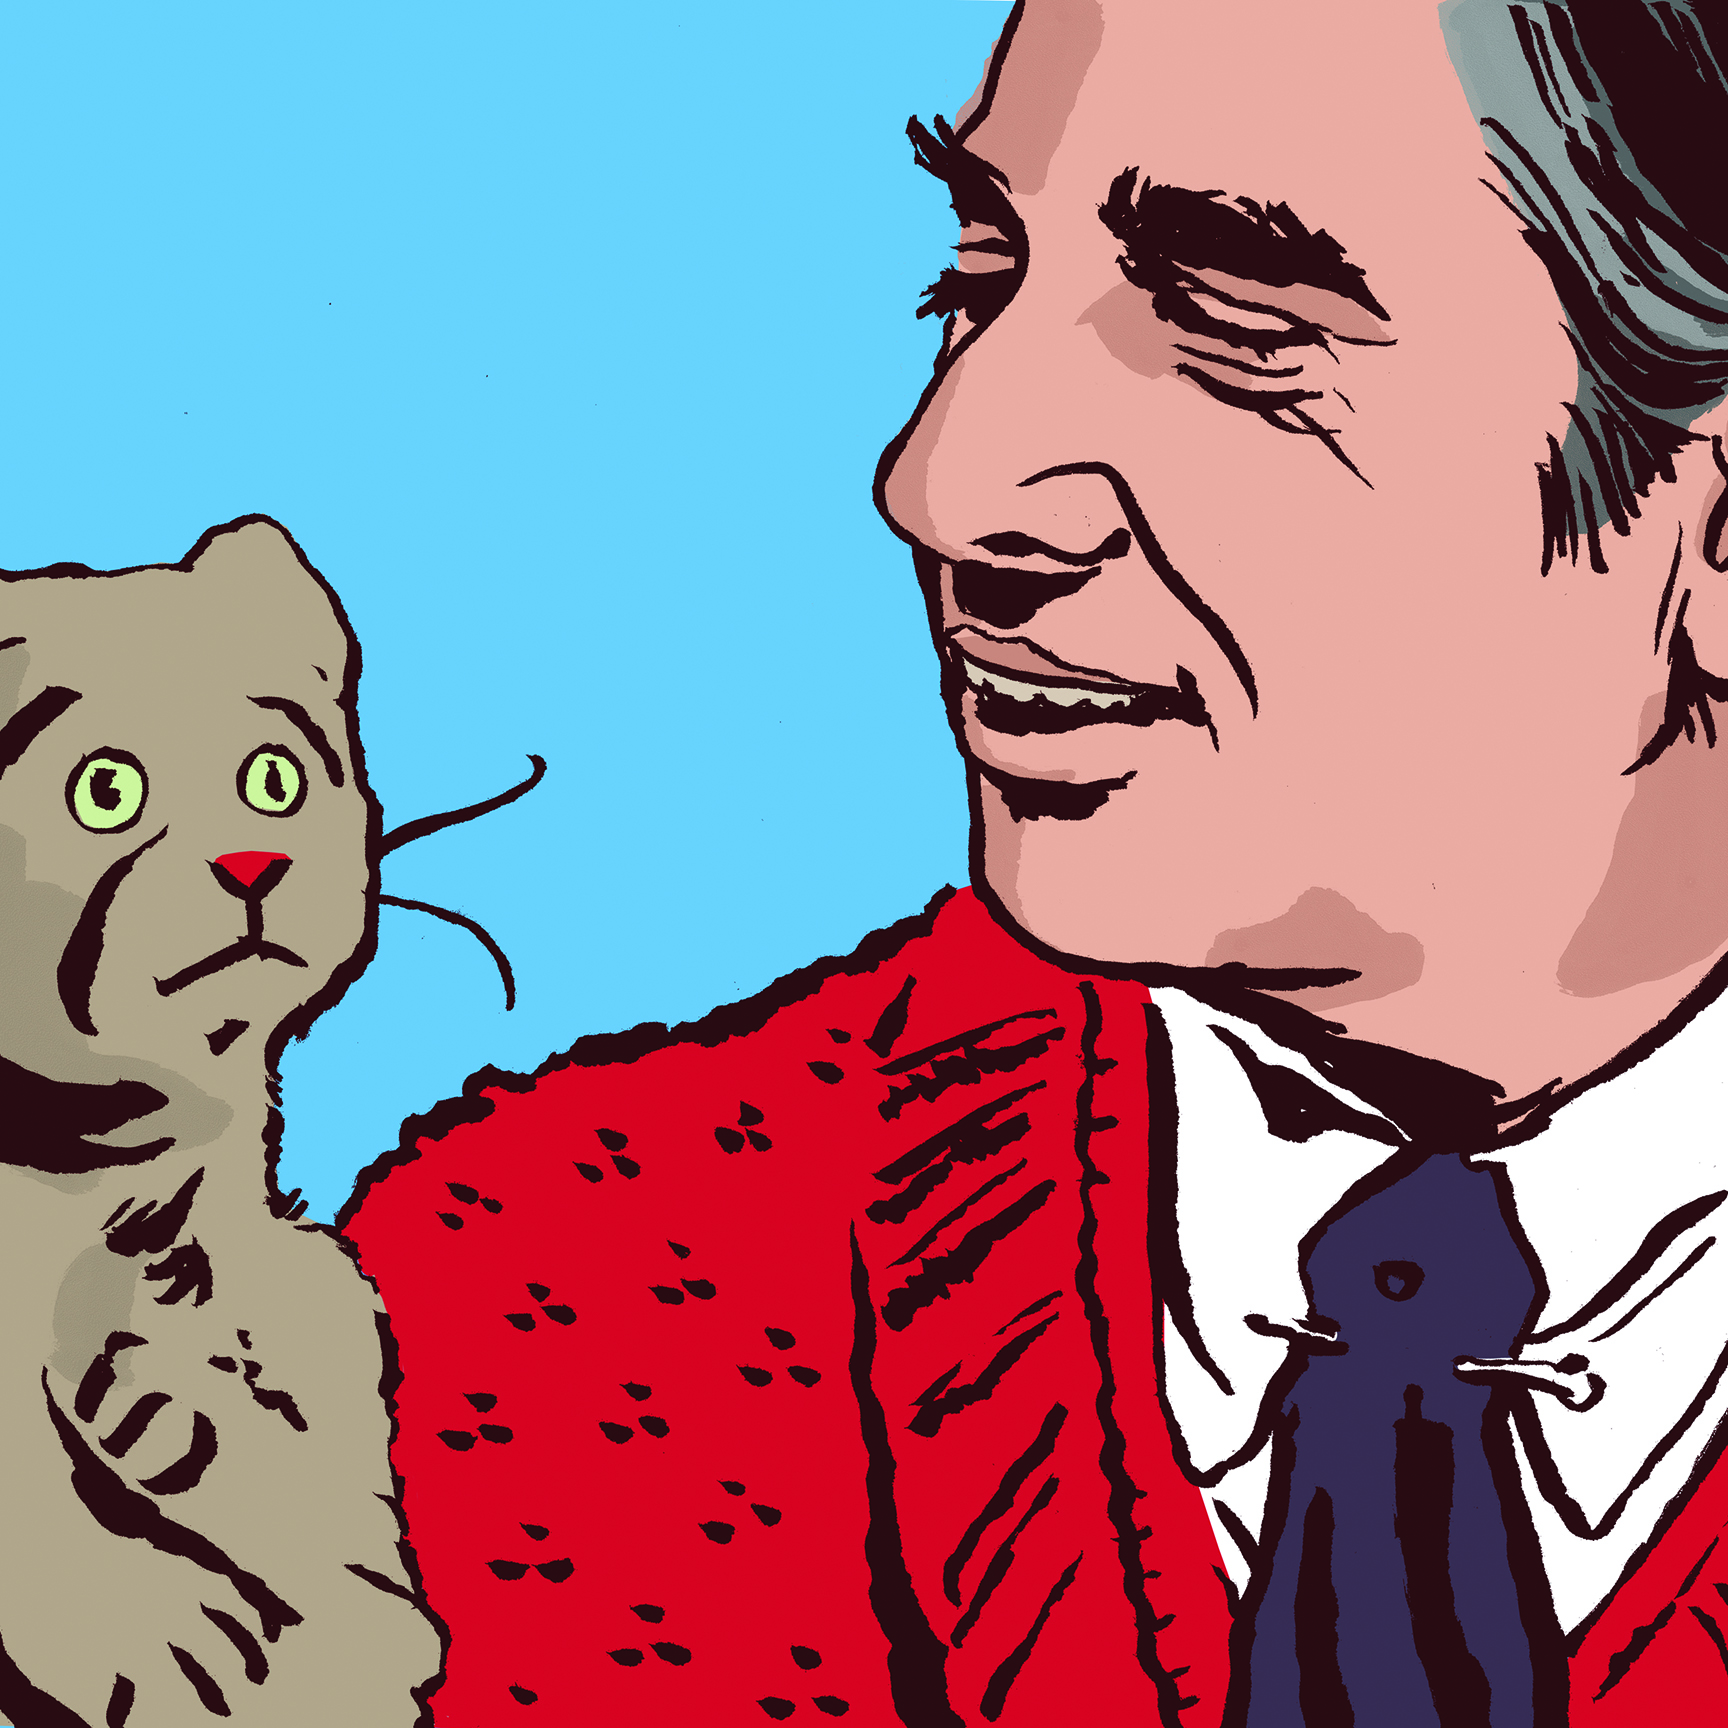 Illustration of Mister Rogers